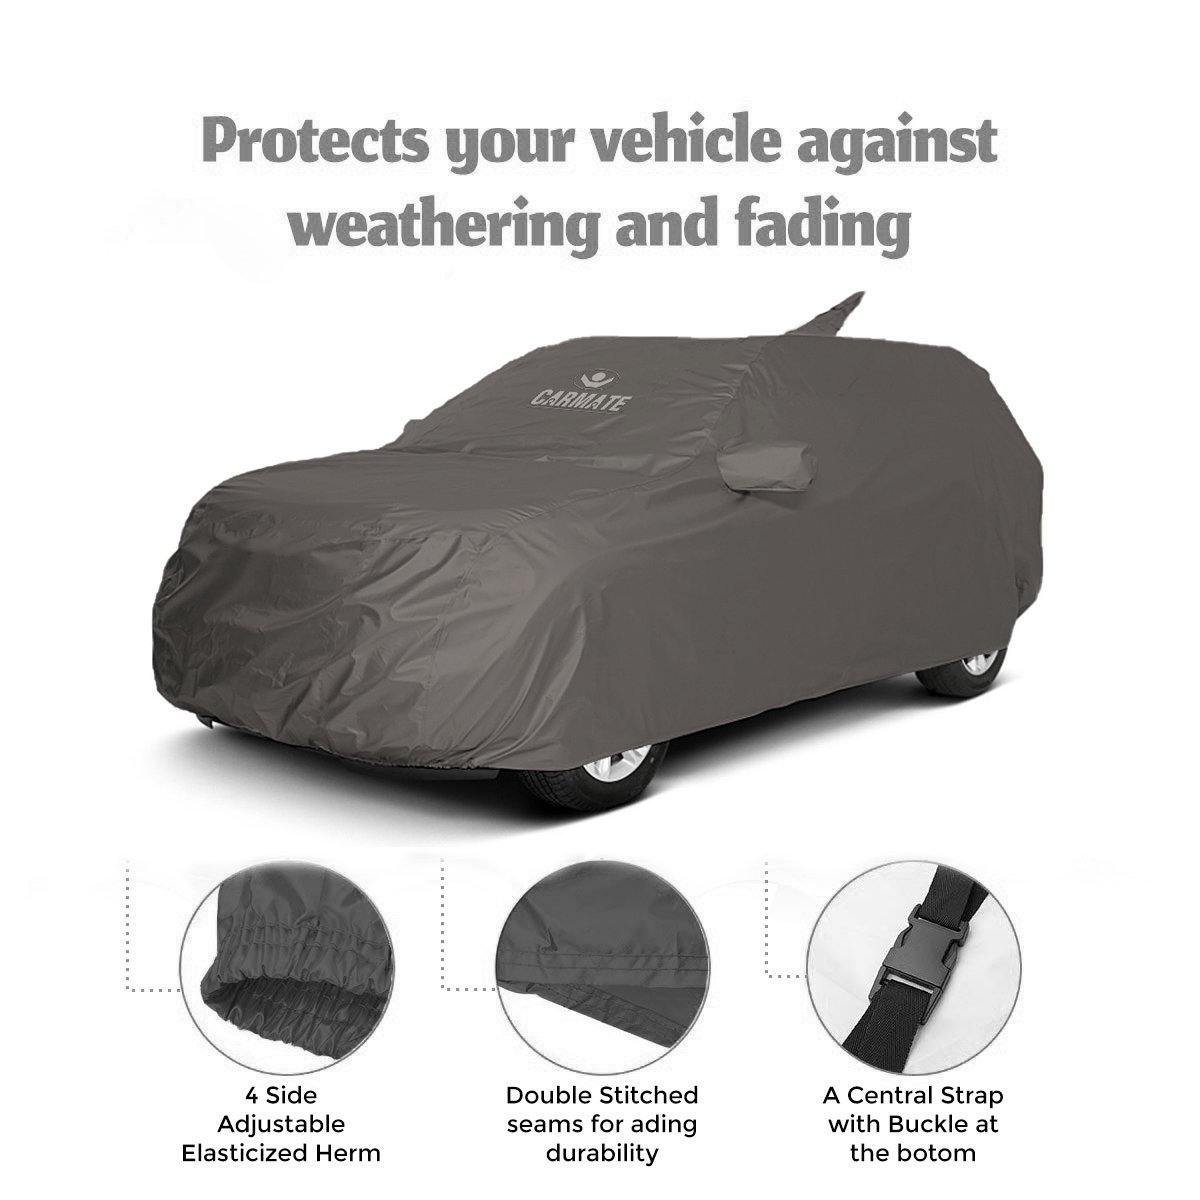 Carmate Car Body Cover 100% Waterproof Pride (Grey) for Maruti - Baleno - CARMATE®